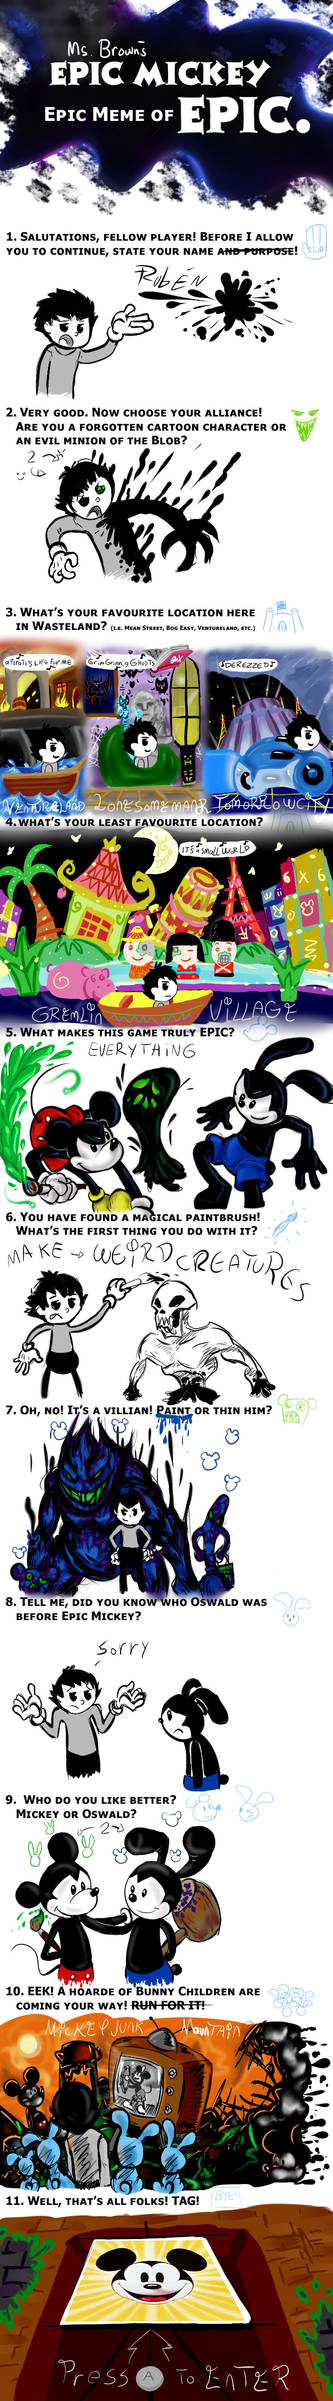 Epic Mickey meme Rubtox by rubtox on DeviantArt